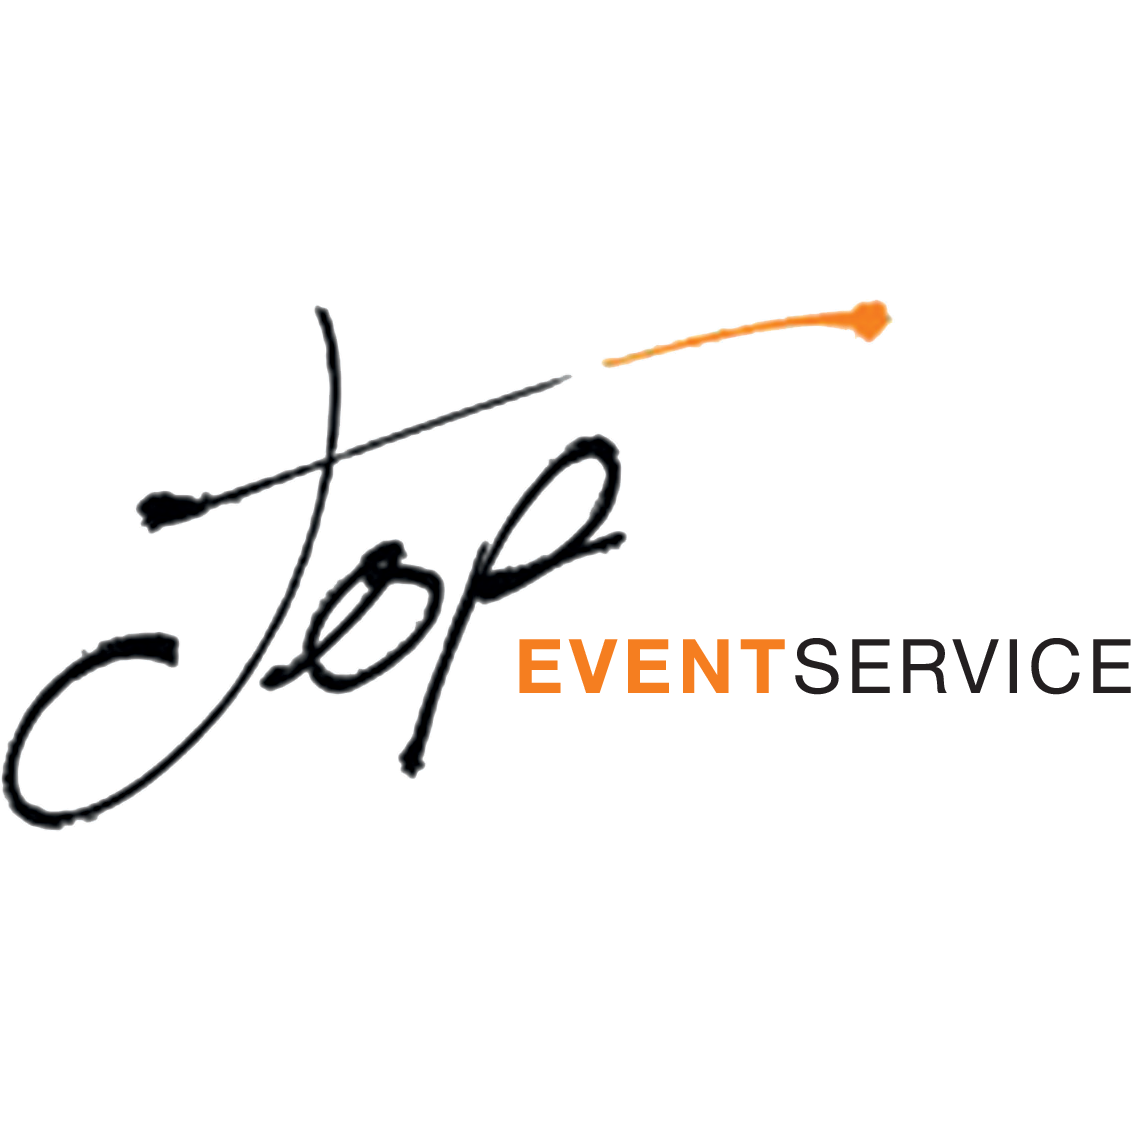 Top Eventservice Logo